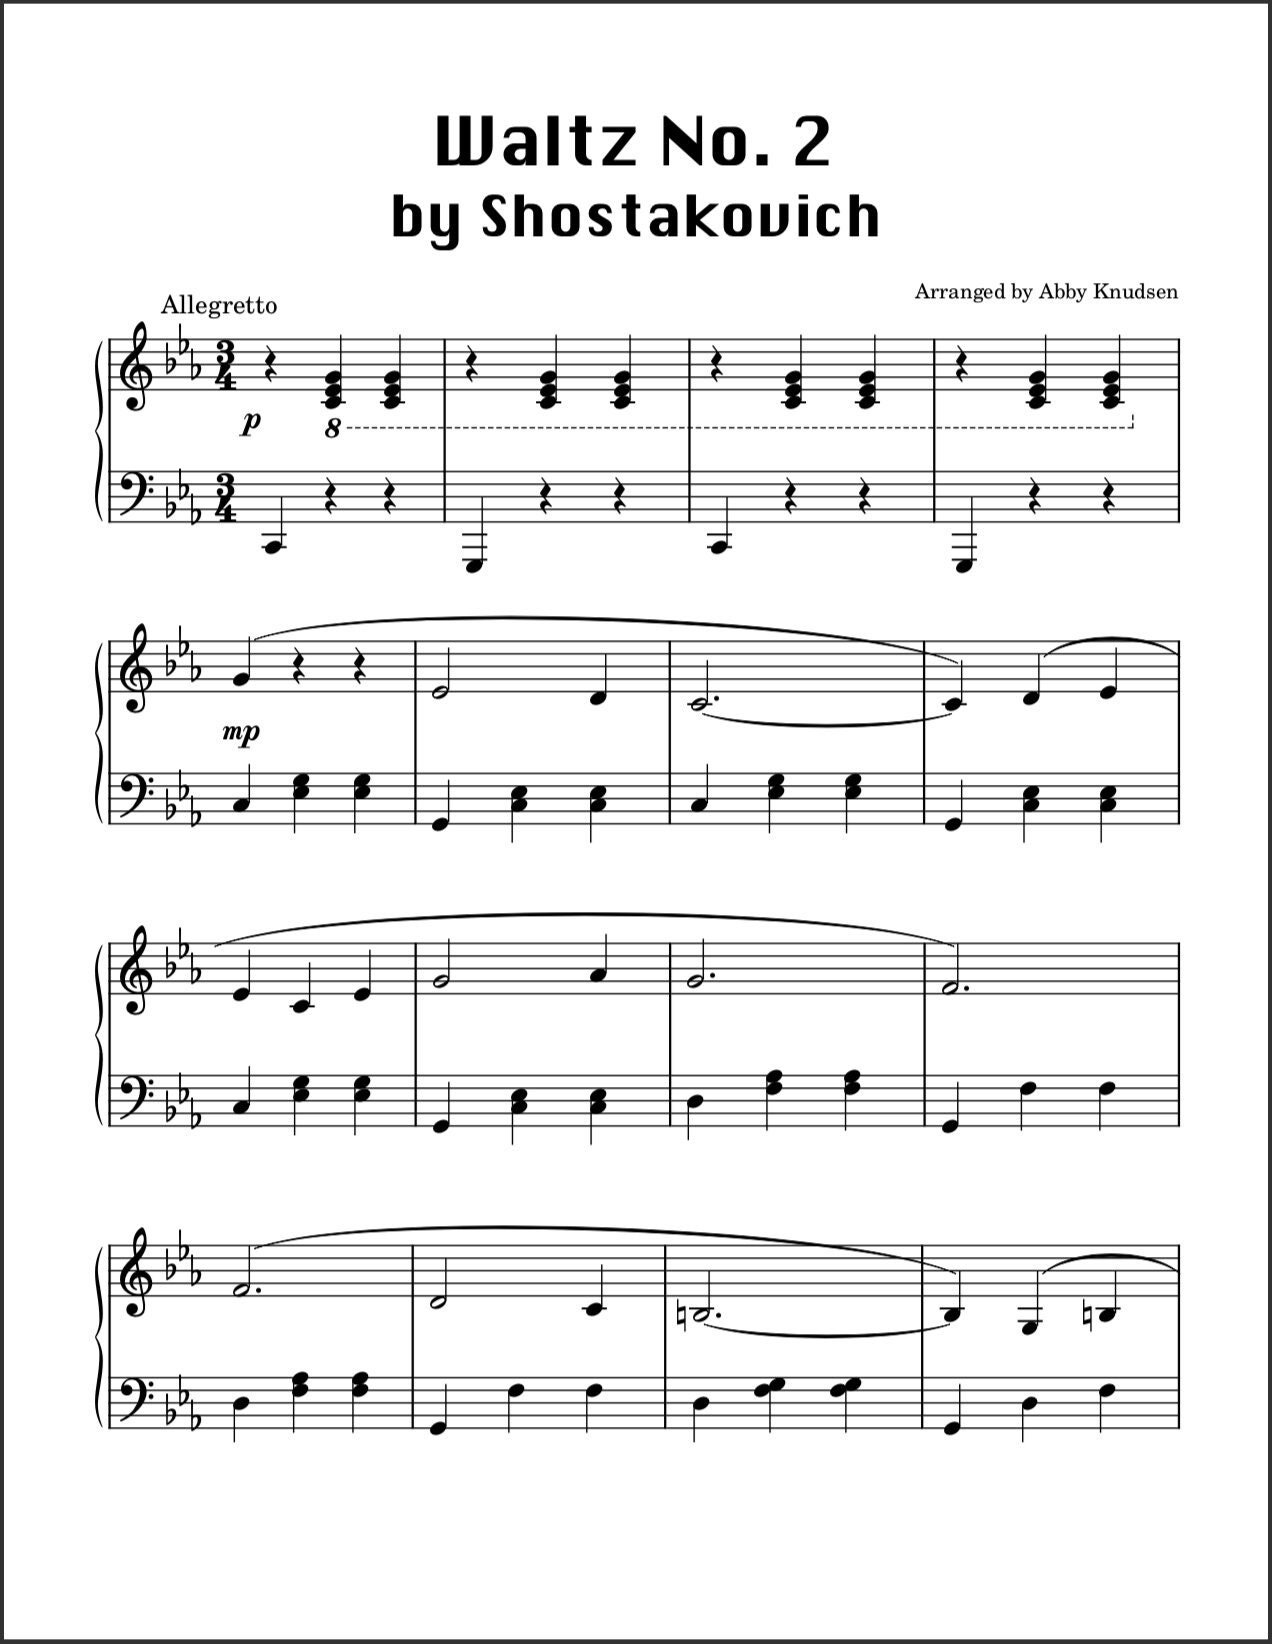 SIMPLIFIED Waltz No. 2 by Shostakovich Piano Sheet Music Printable PDF 